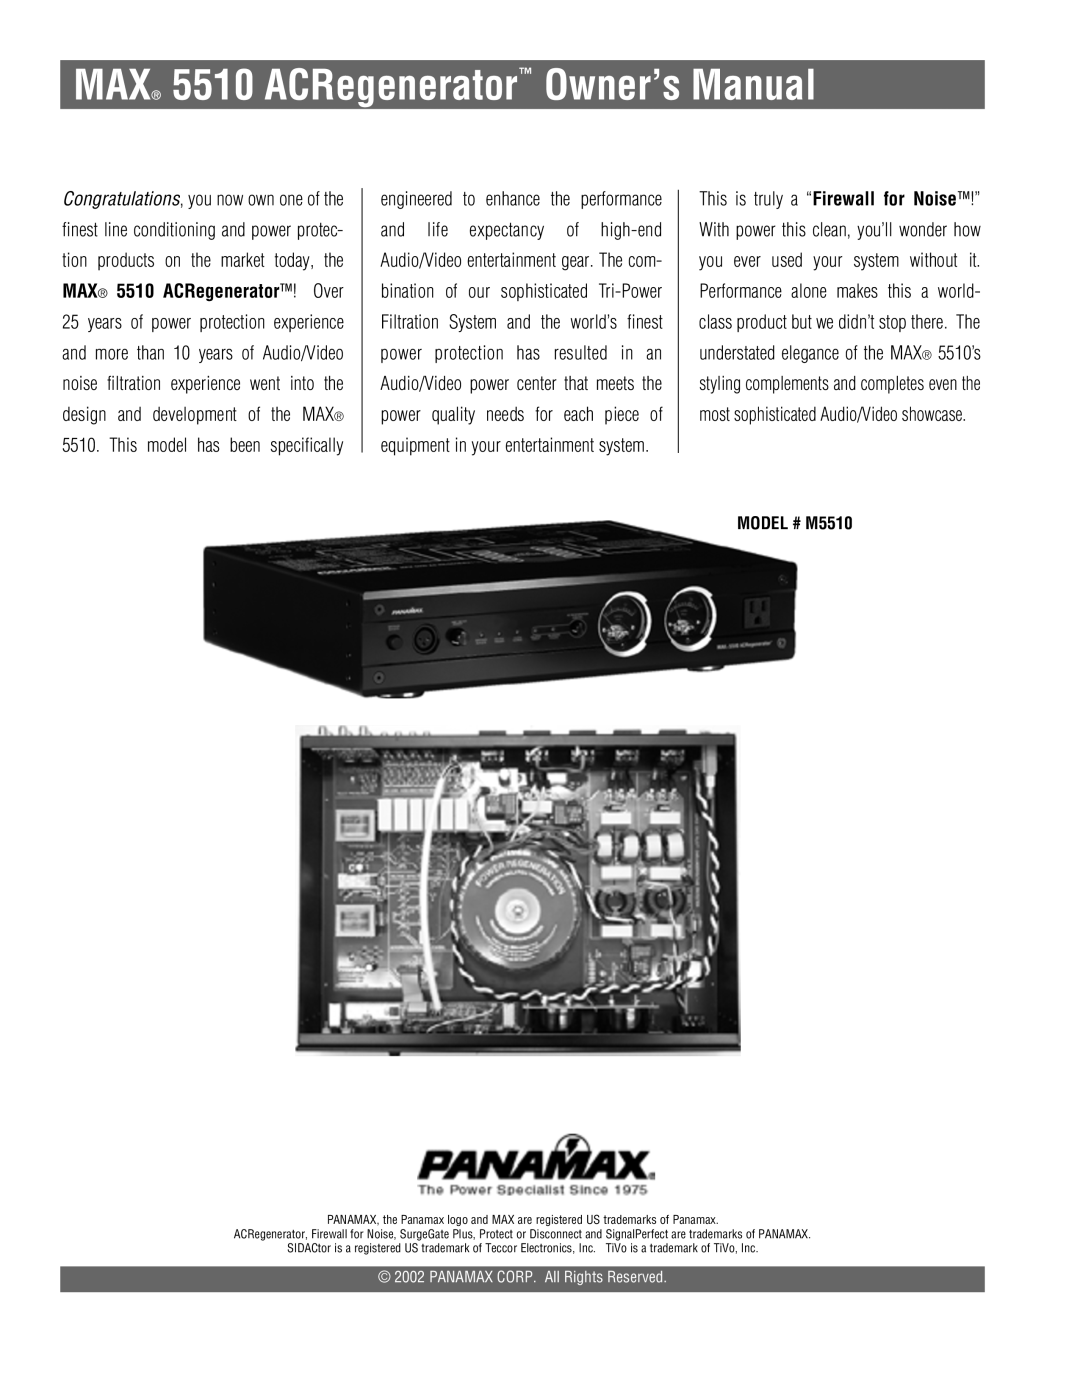 Panamax owner manual MAX 5510 ACRegenerator Owner’s Manual, MODEL # M5510, PANAMAX CORP. All Rights Reserved 